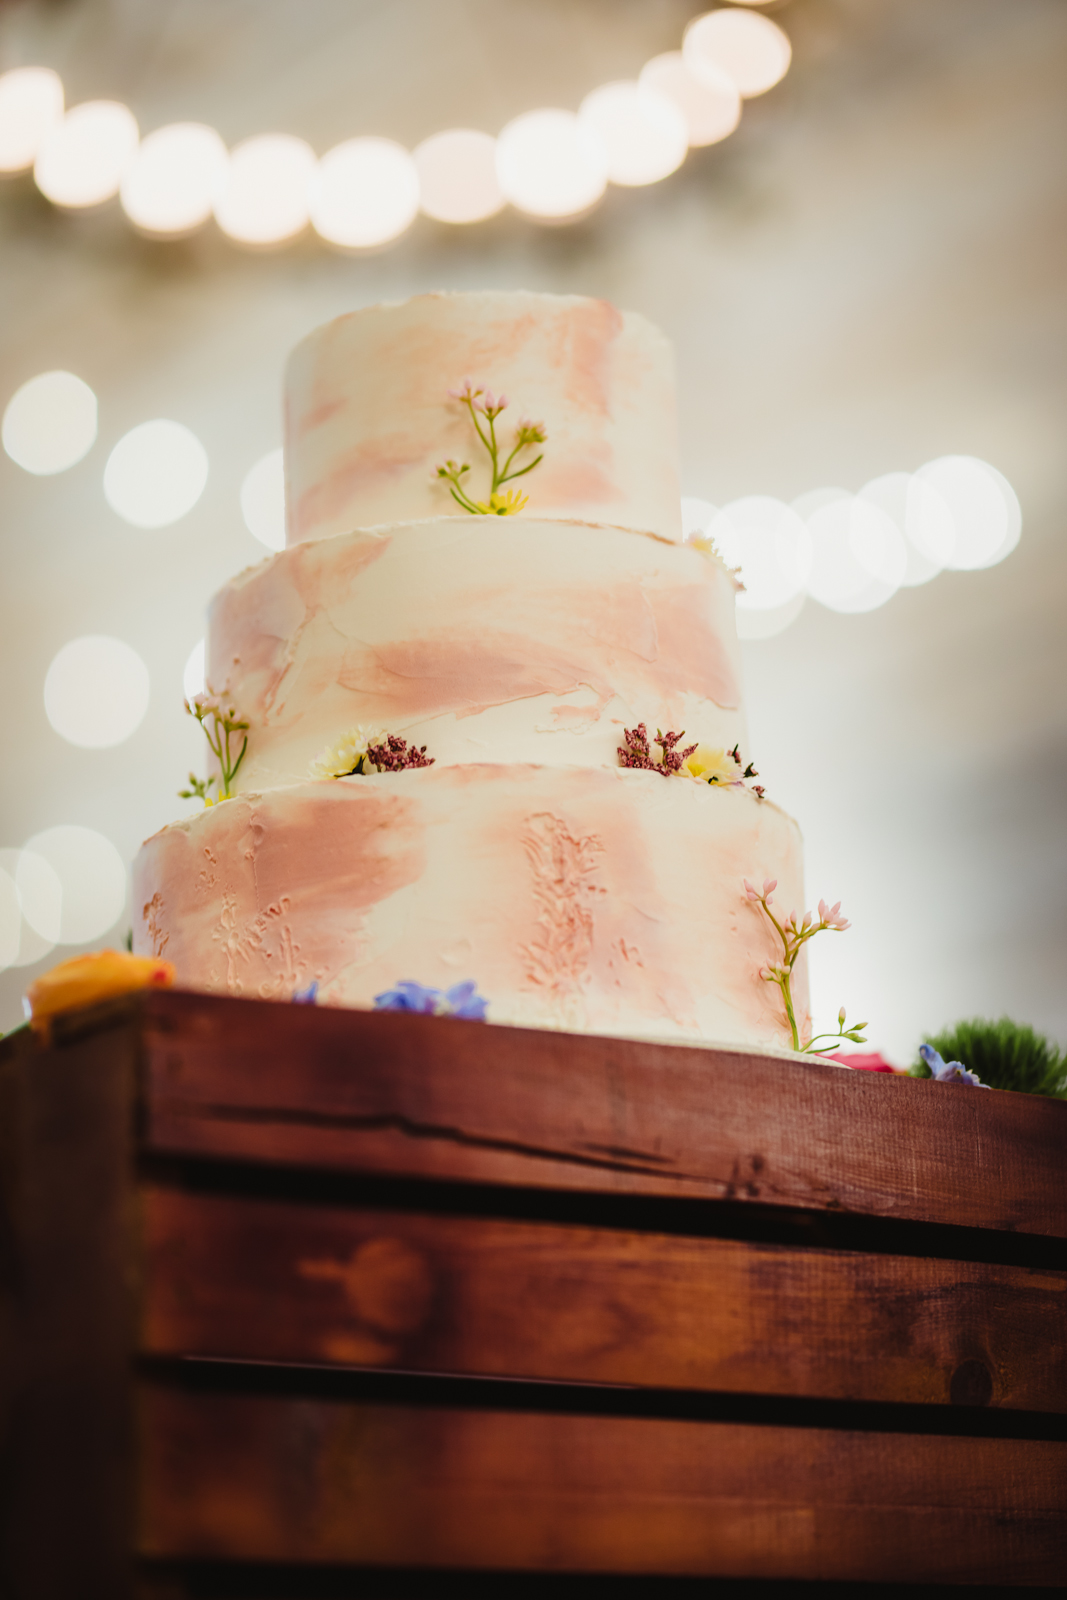 Vibrant Wedding Cake